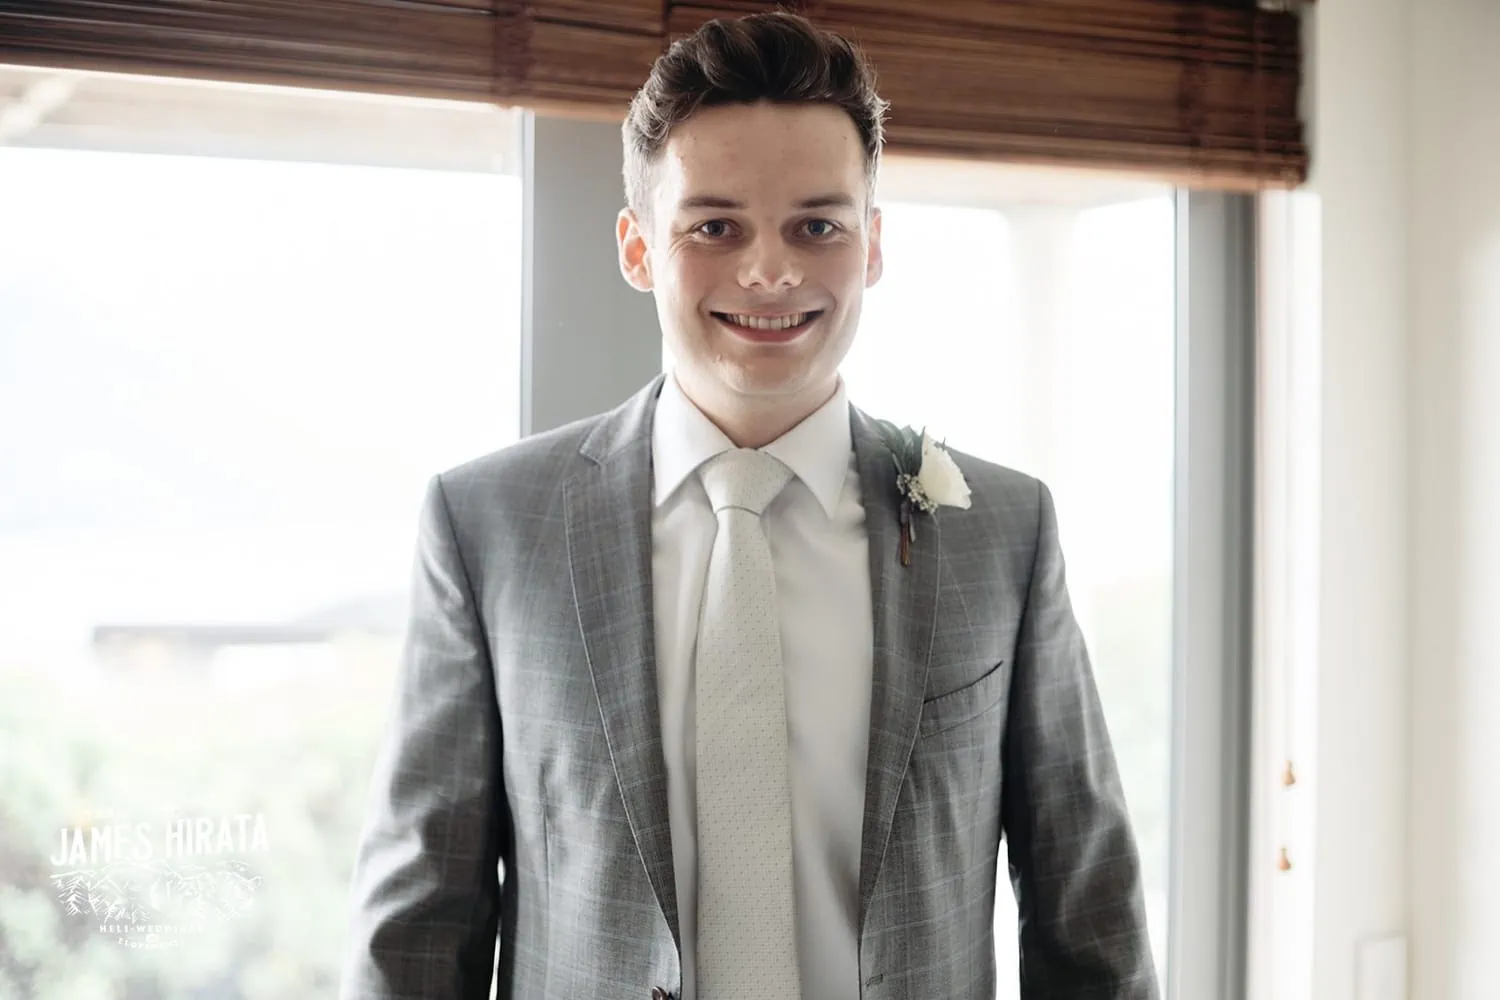 Regan, Jake, Queenstown Elopement Wedding: A man in a suit is smiling in front of a window.